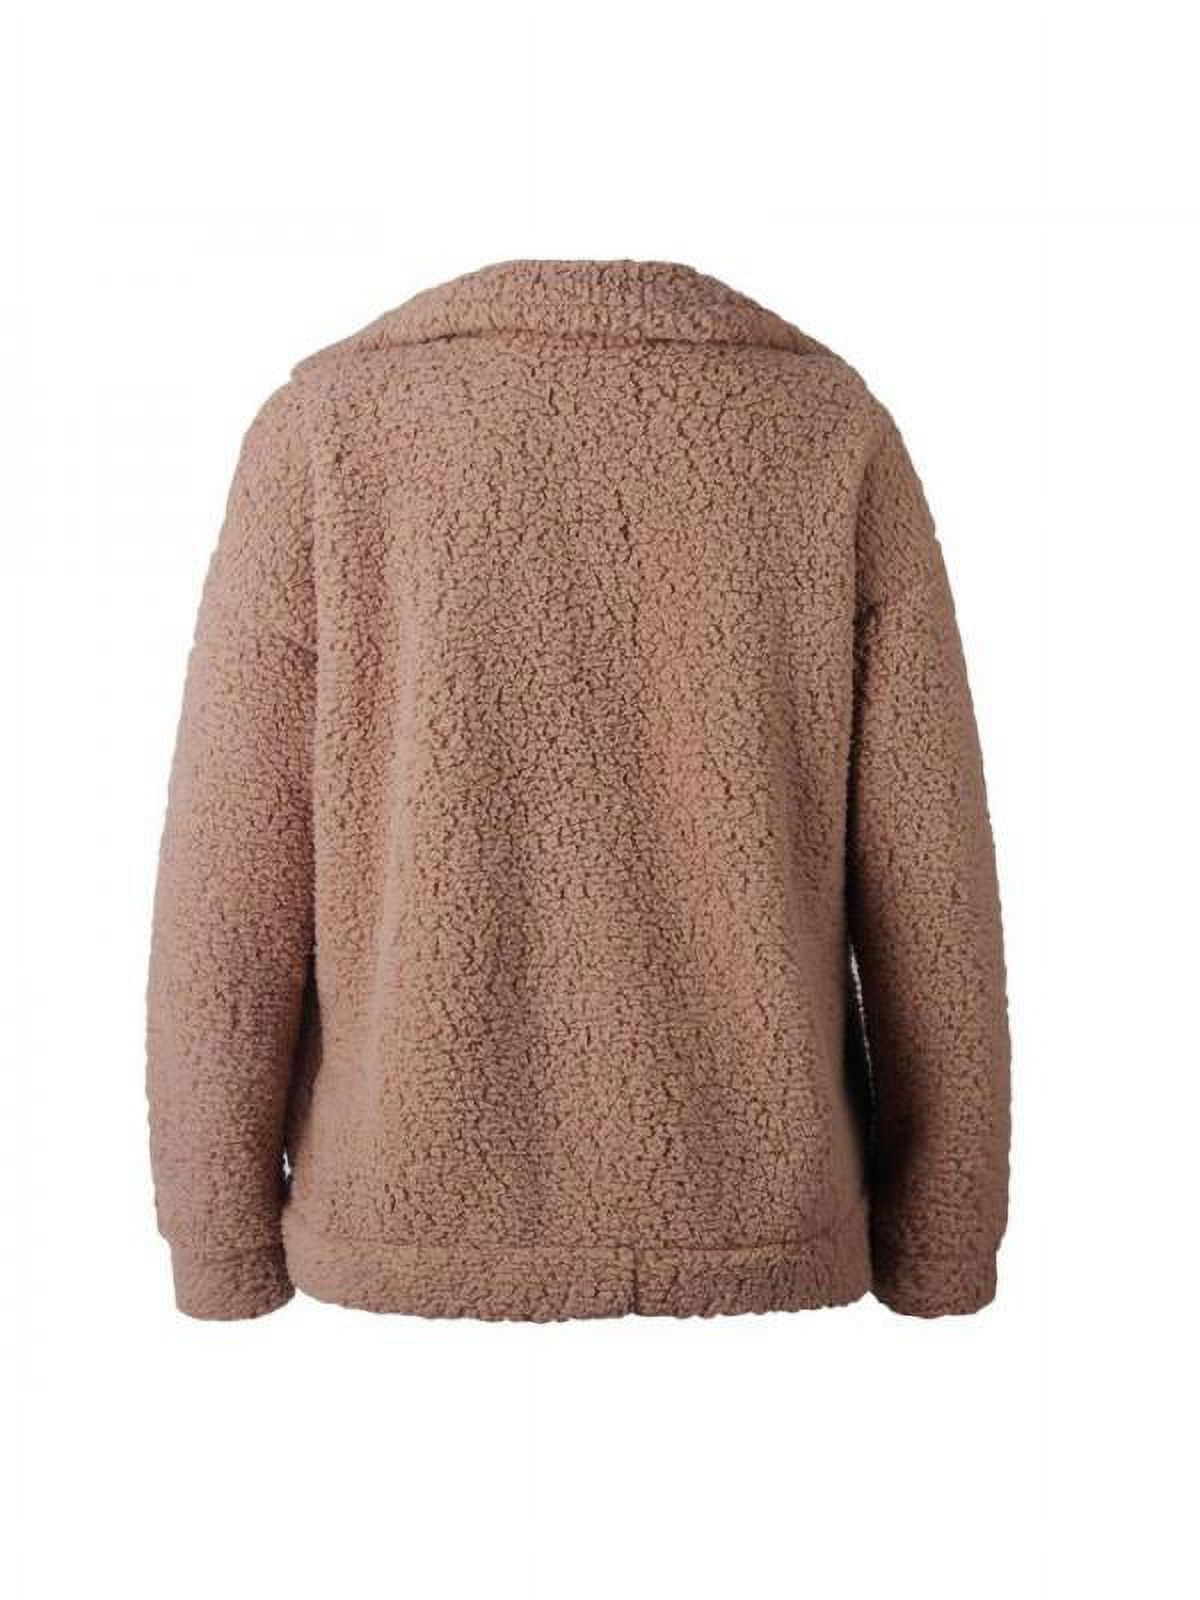 Women Fashionable Loose Lapel Cozy Jacket Coat Long Sleeve Autumn Winter Warm Zipper Plush Outwear - image 2 of 6